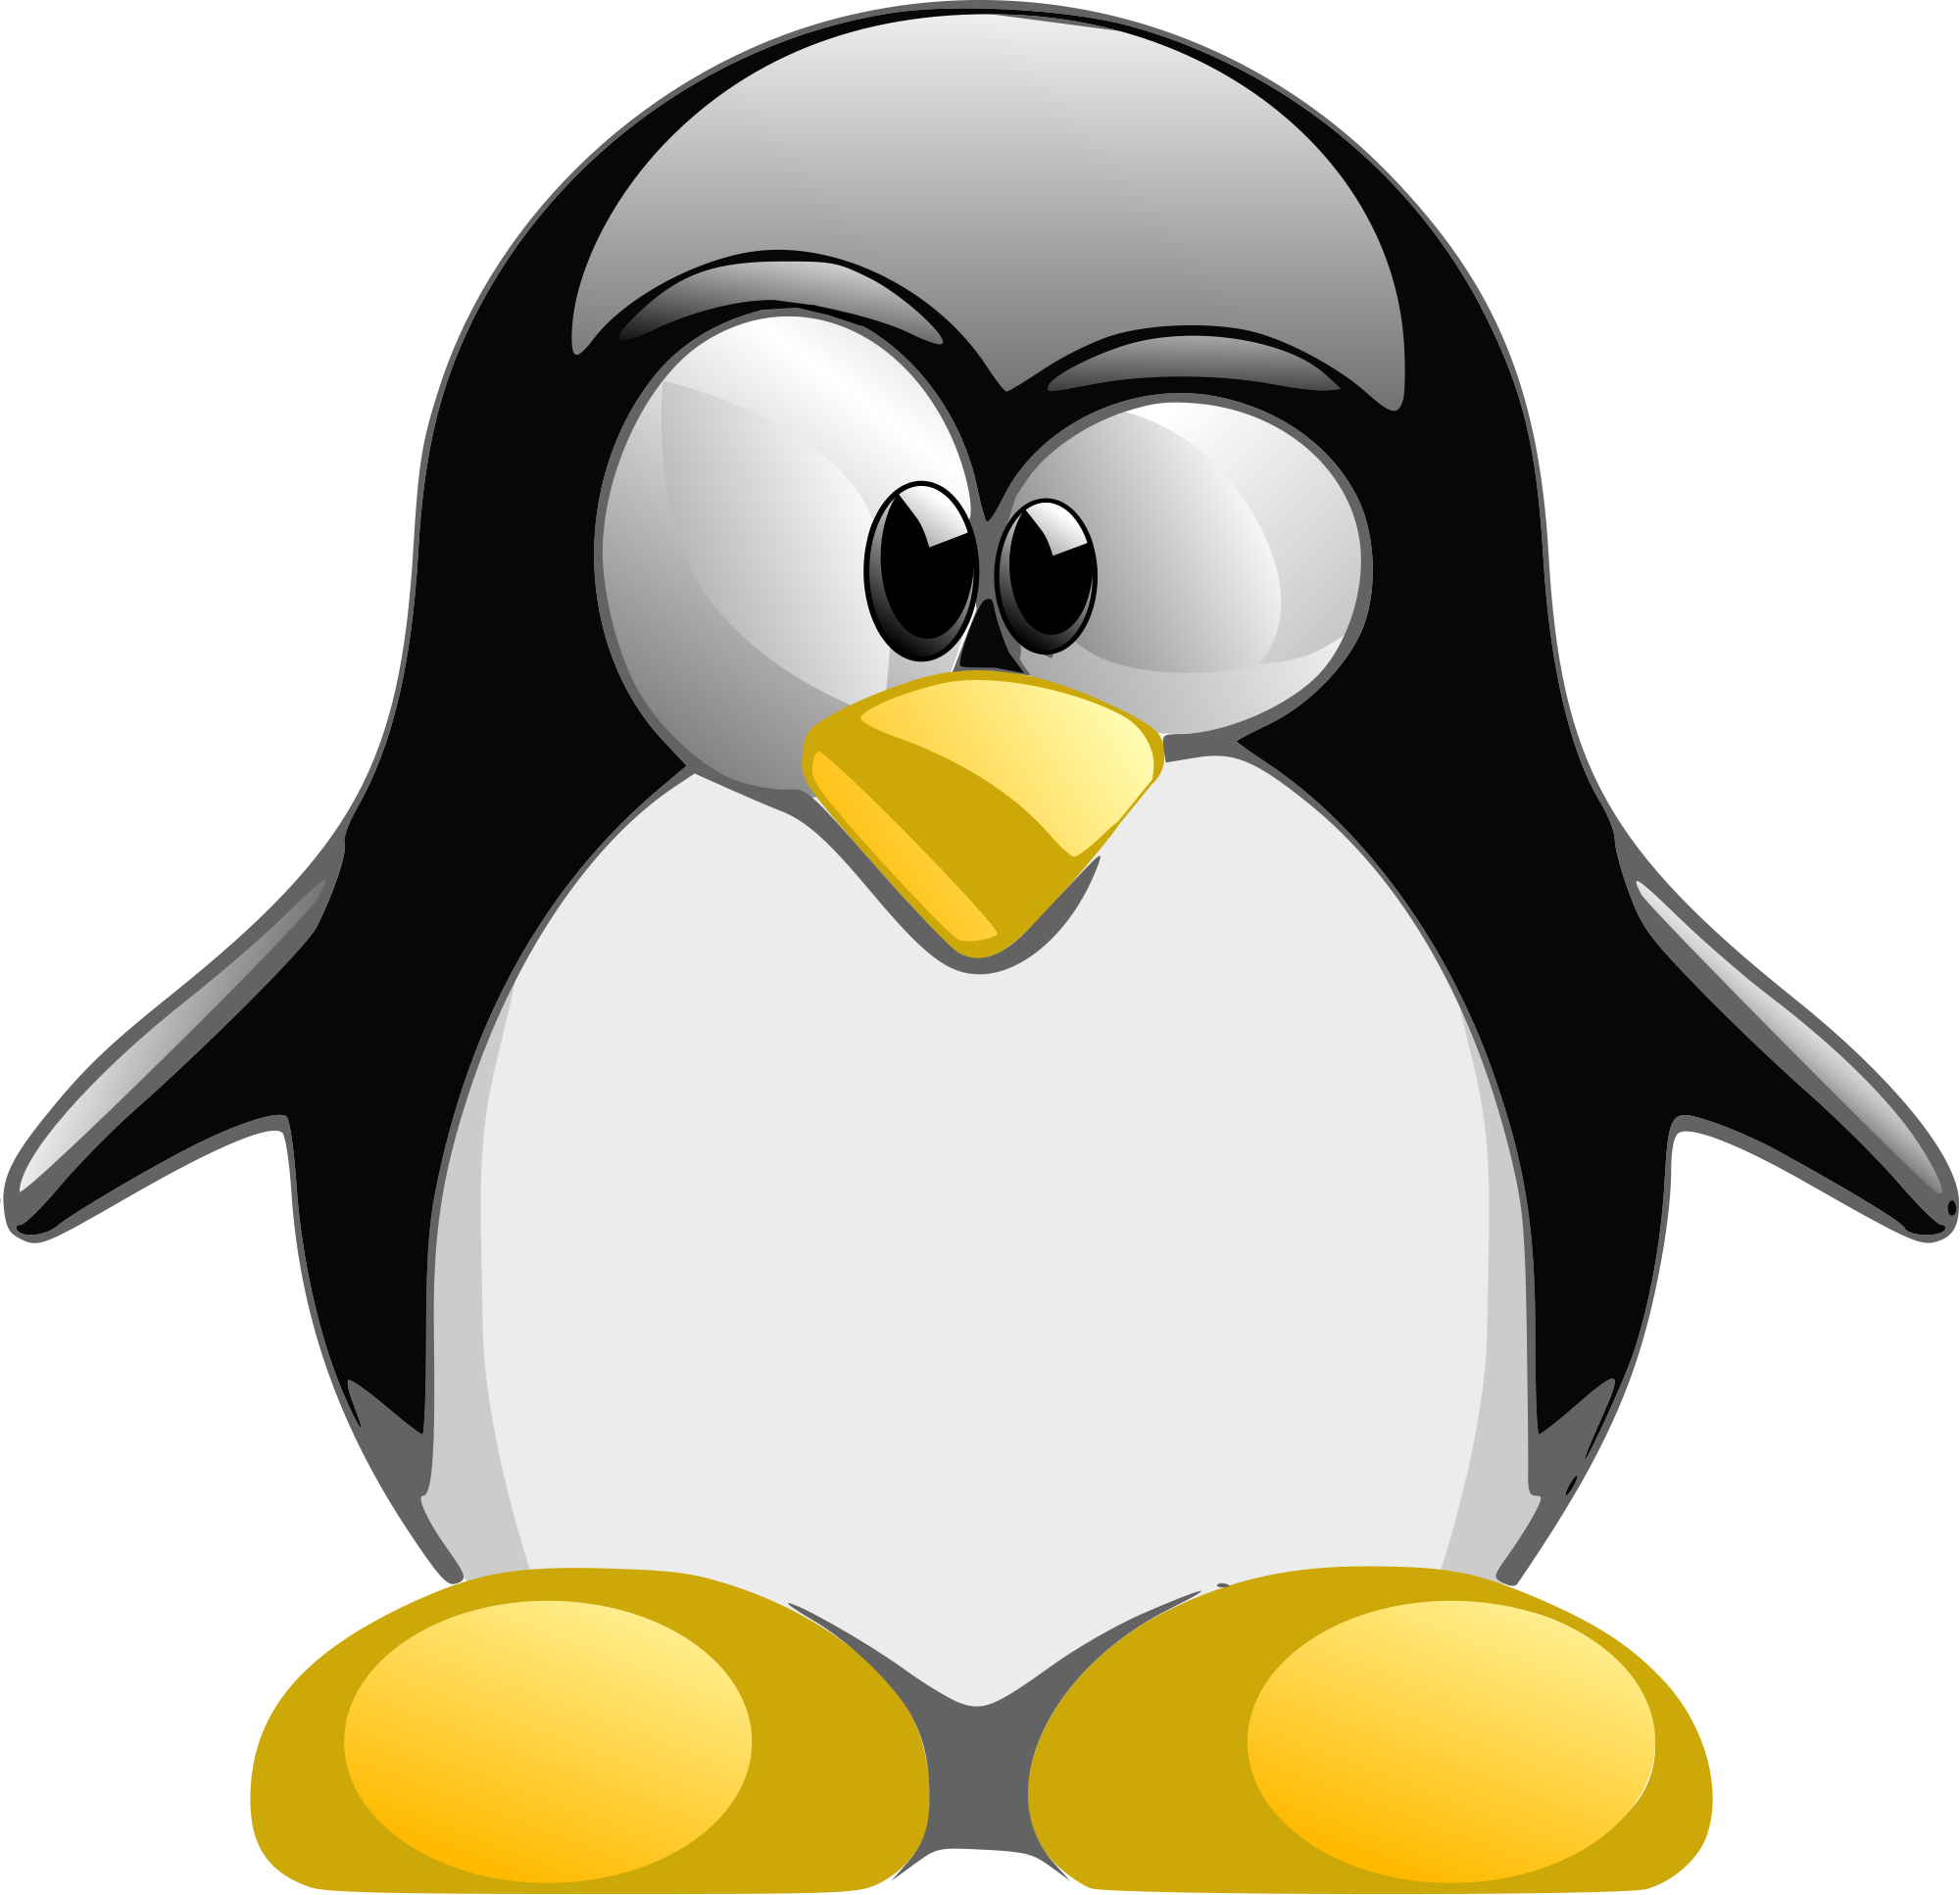 pinguin - Google zoeken | pinguins | Pinterest | Searching